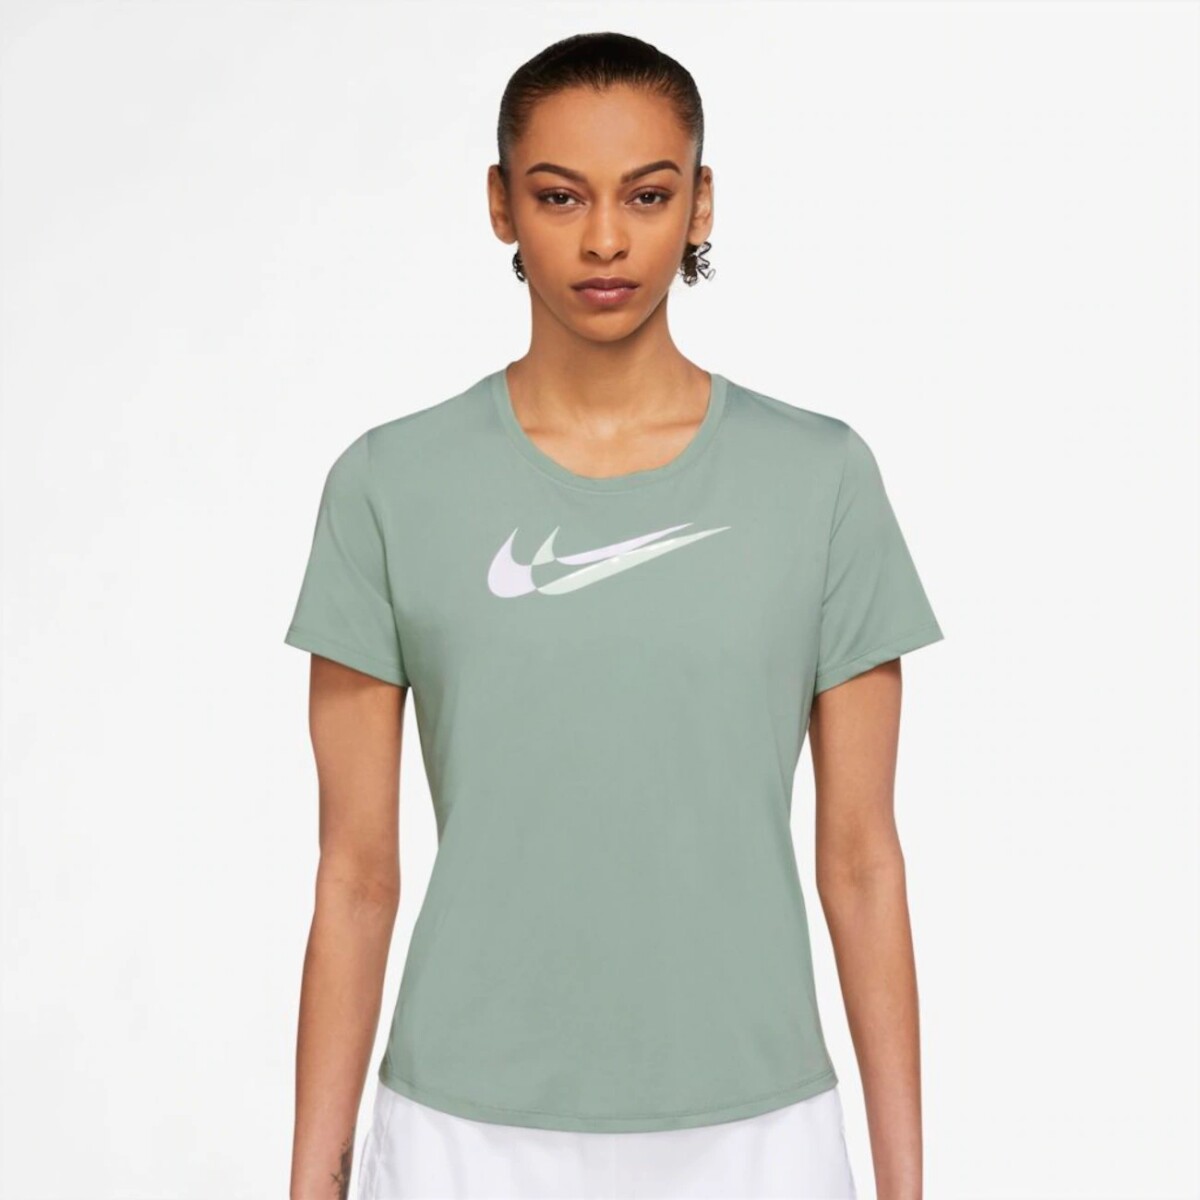 Remera Nike Running Dama WSH RUN - Color Único 